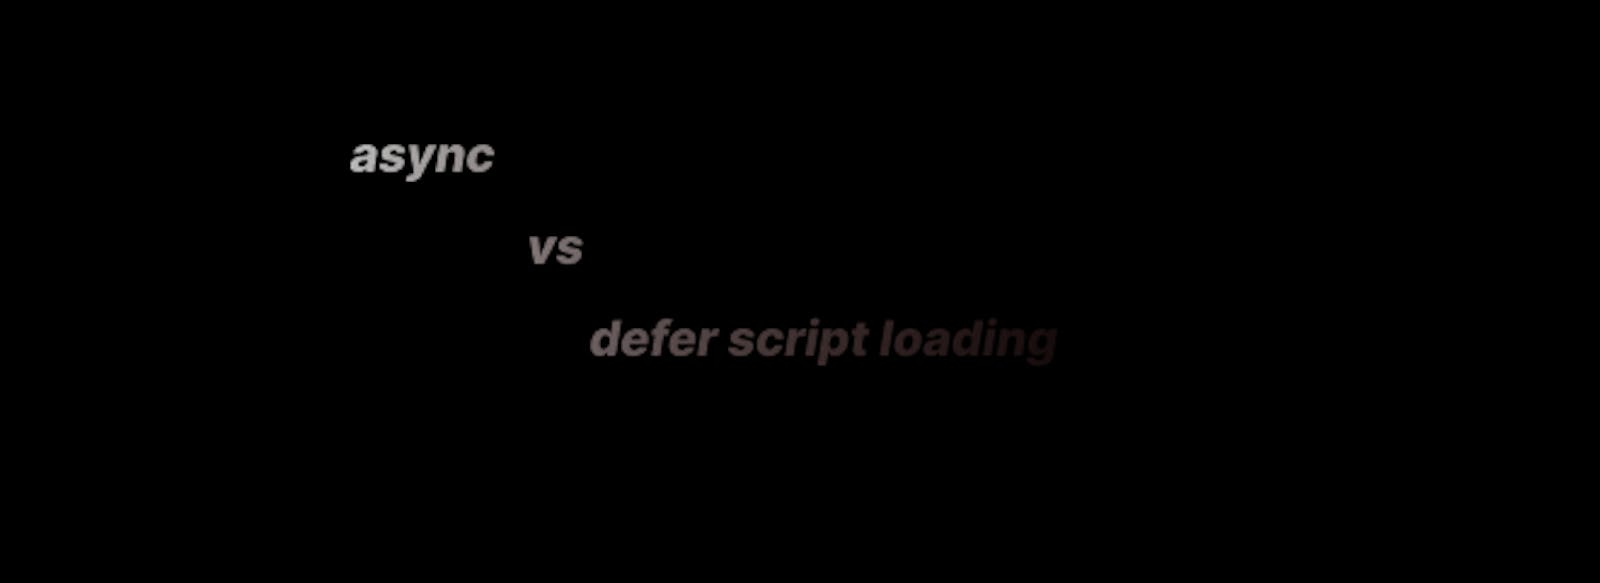 Understanding Async vs. Defer Script Loading in JavaScript